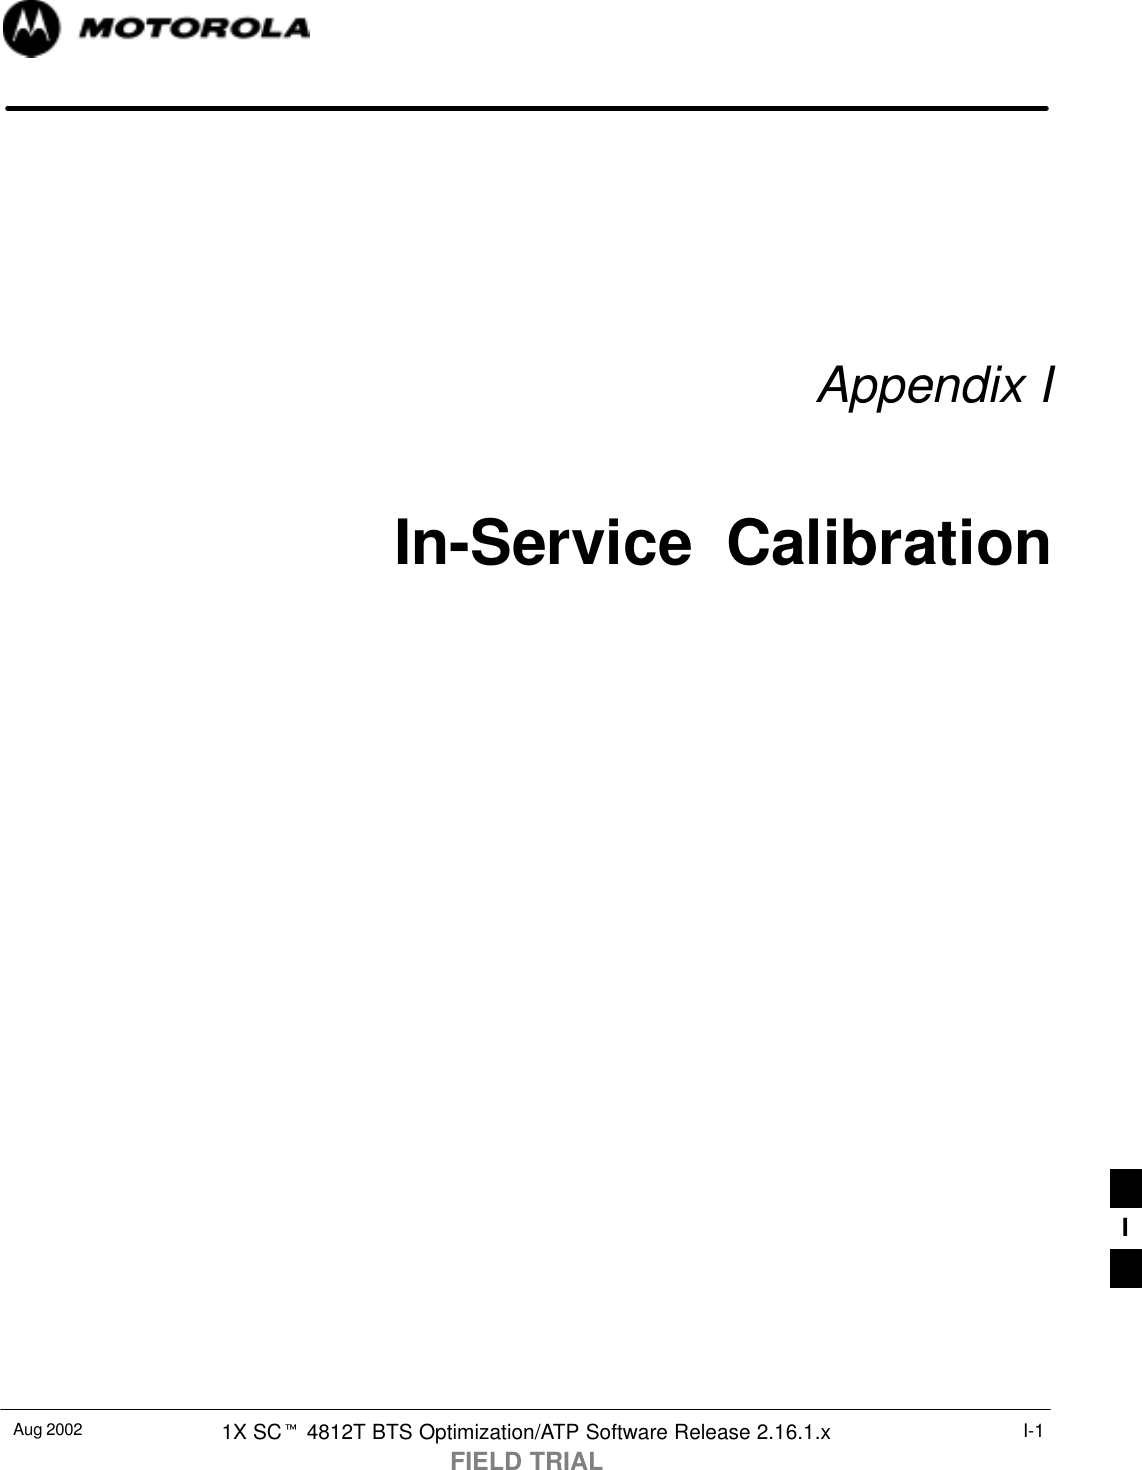 Aug 2002 1X SCt 4812T BTS Optimization/ATP Software Release 2.16.1.xFIELD TRIALI-1Appendix IIn-Service  CalibrationI